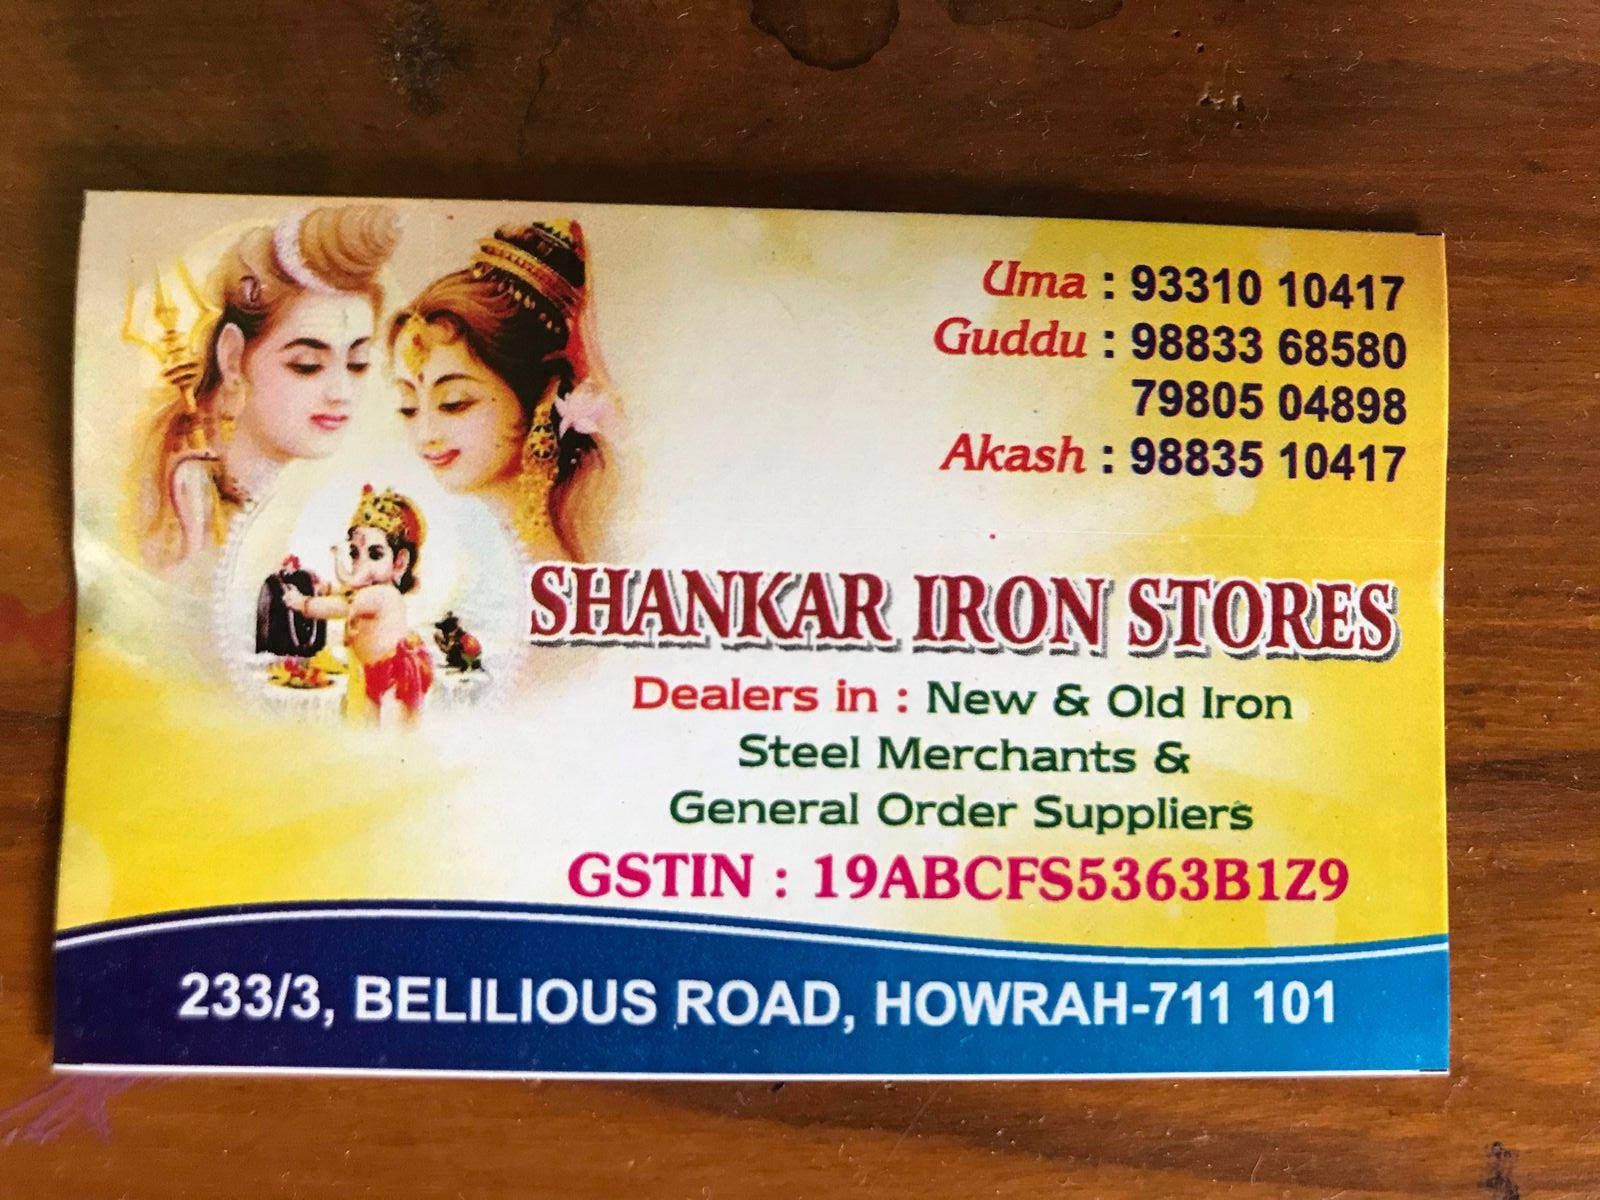 Shankar Iron Stores